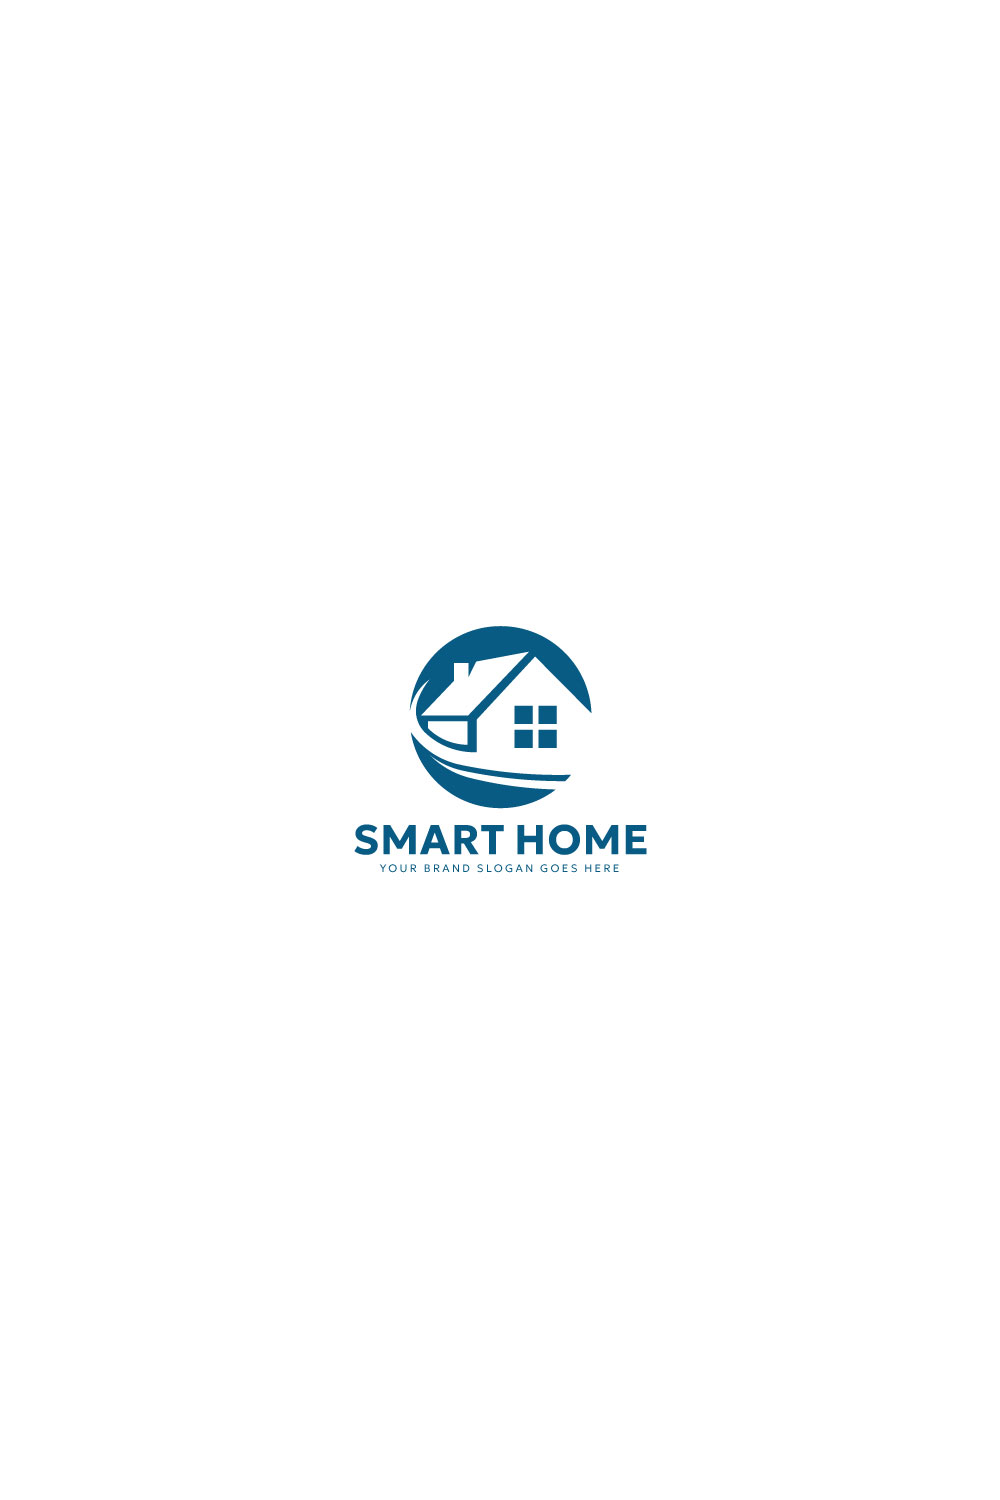 Smart Home Logo design pinterest preview image.